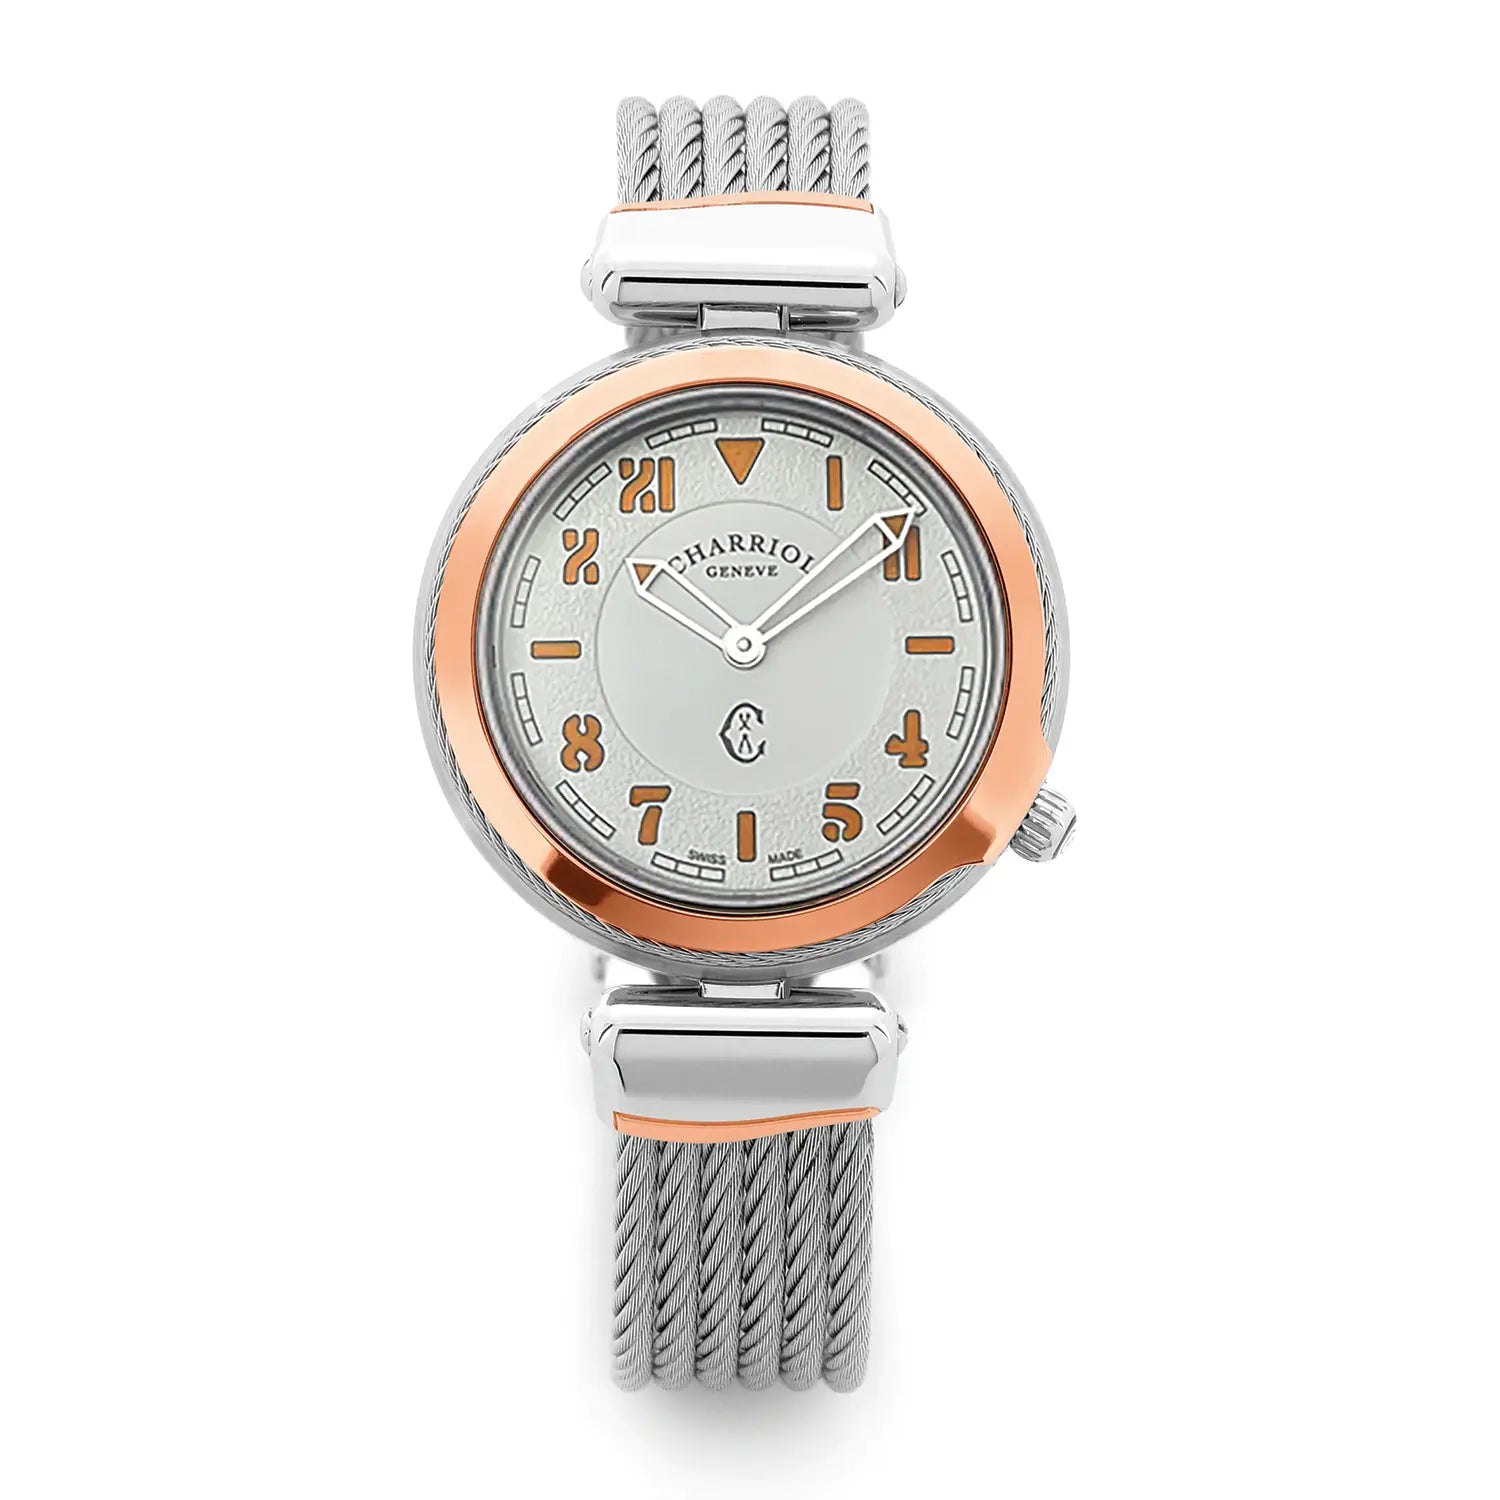 CELTIC® watches u0026 Jewellery - Charriol.com